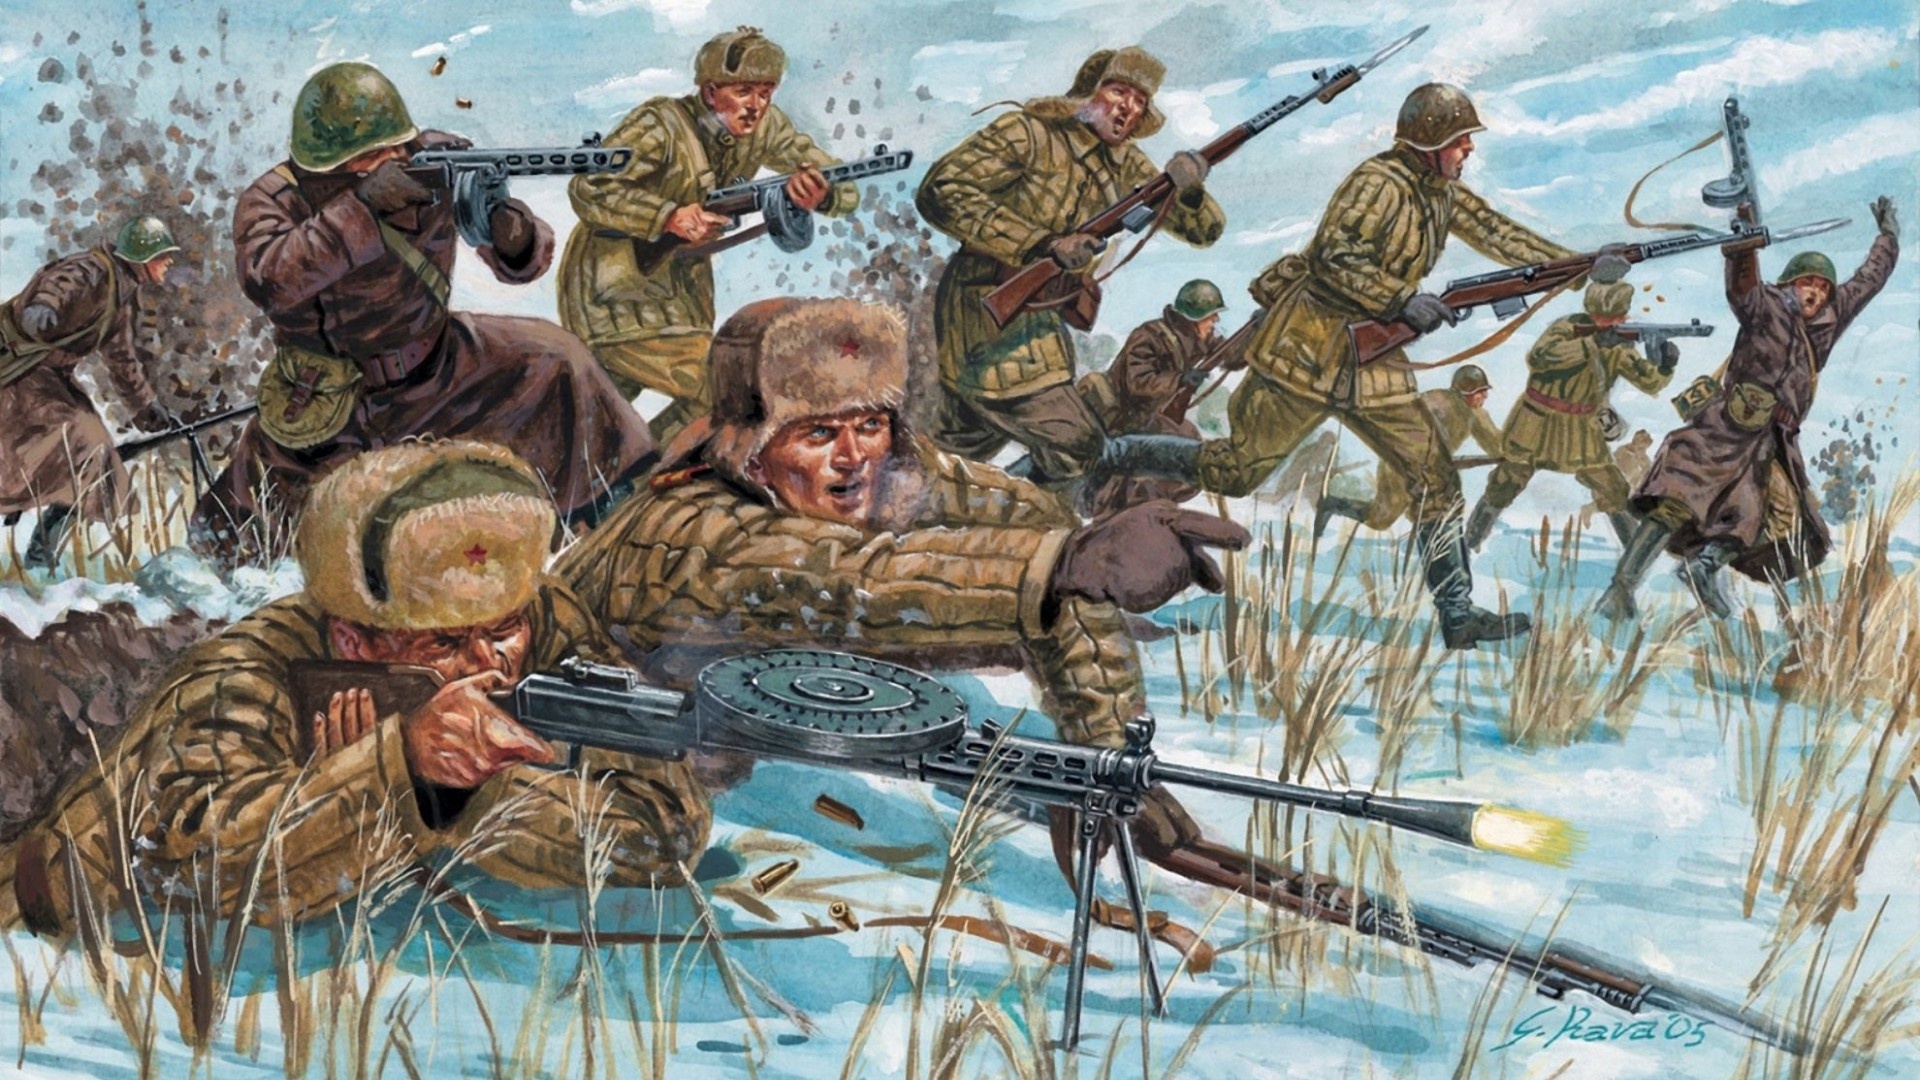 Russian Infantry Ww2 Wallpapers   1920x1080   743792 1920x1080